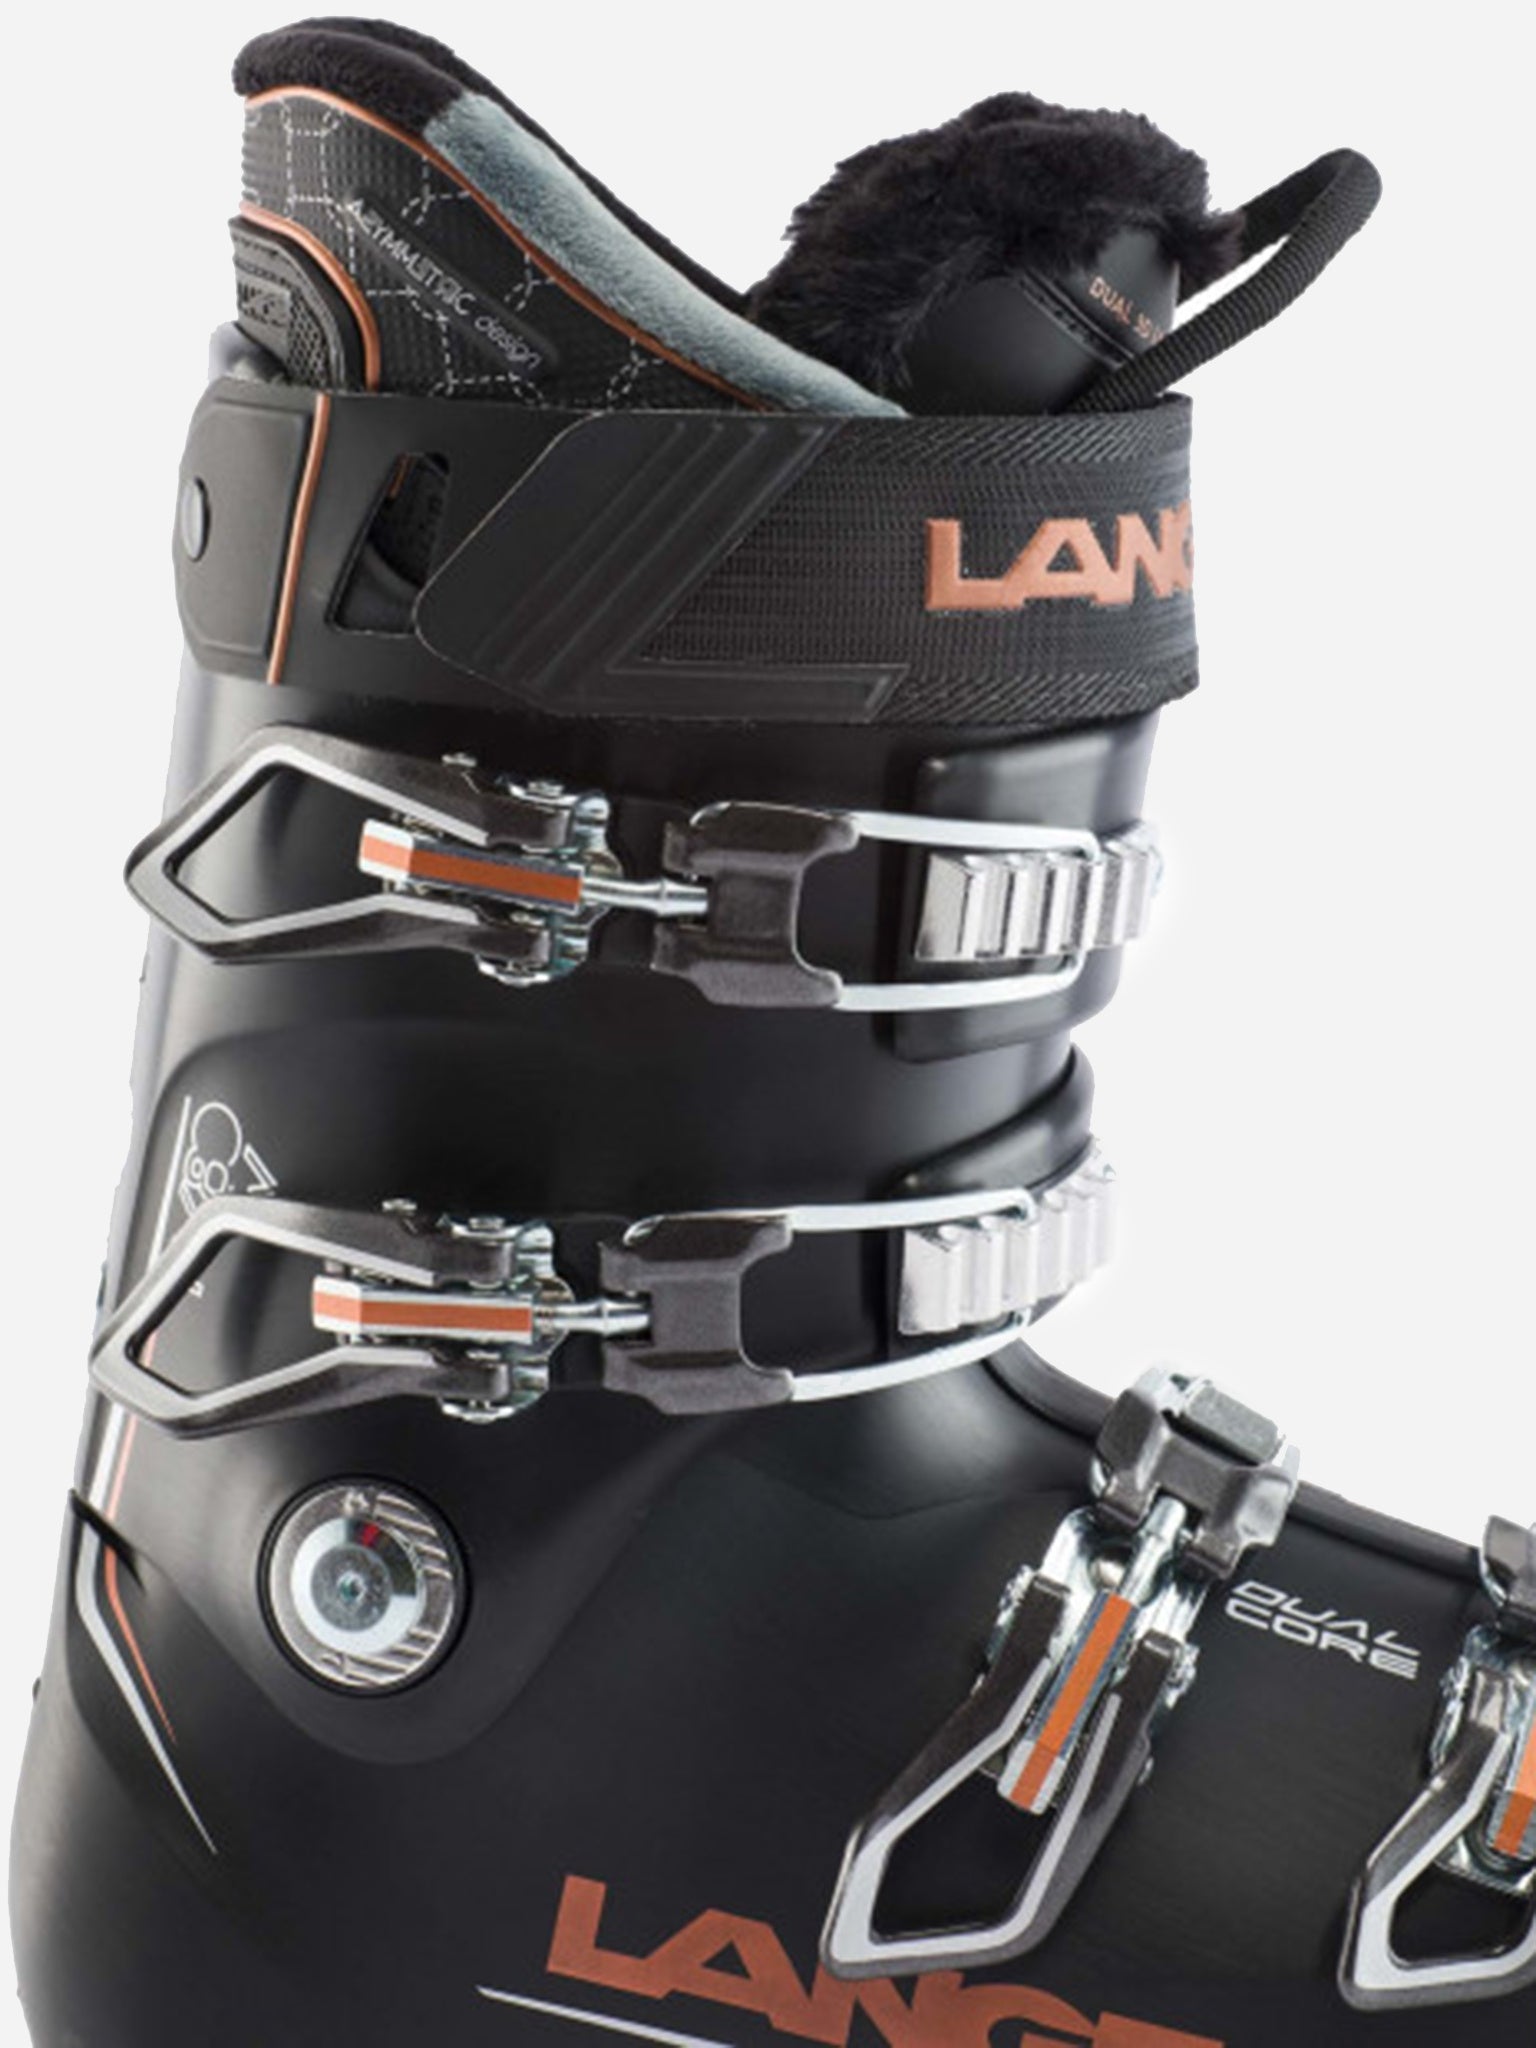 2023 Lange RX 110 LV Women's Ski Boot, Alpine / Ski Boots